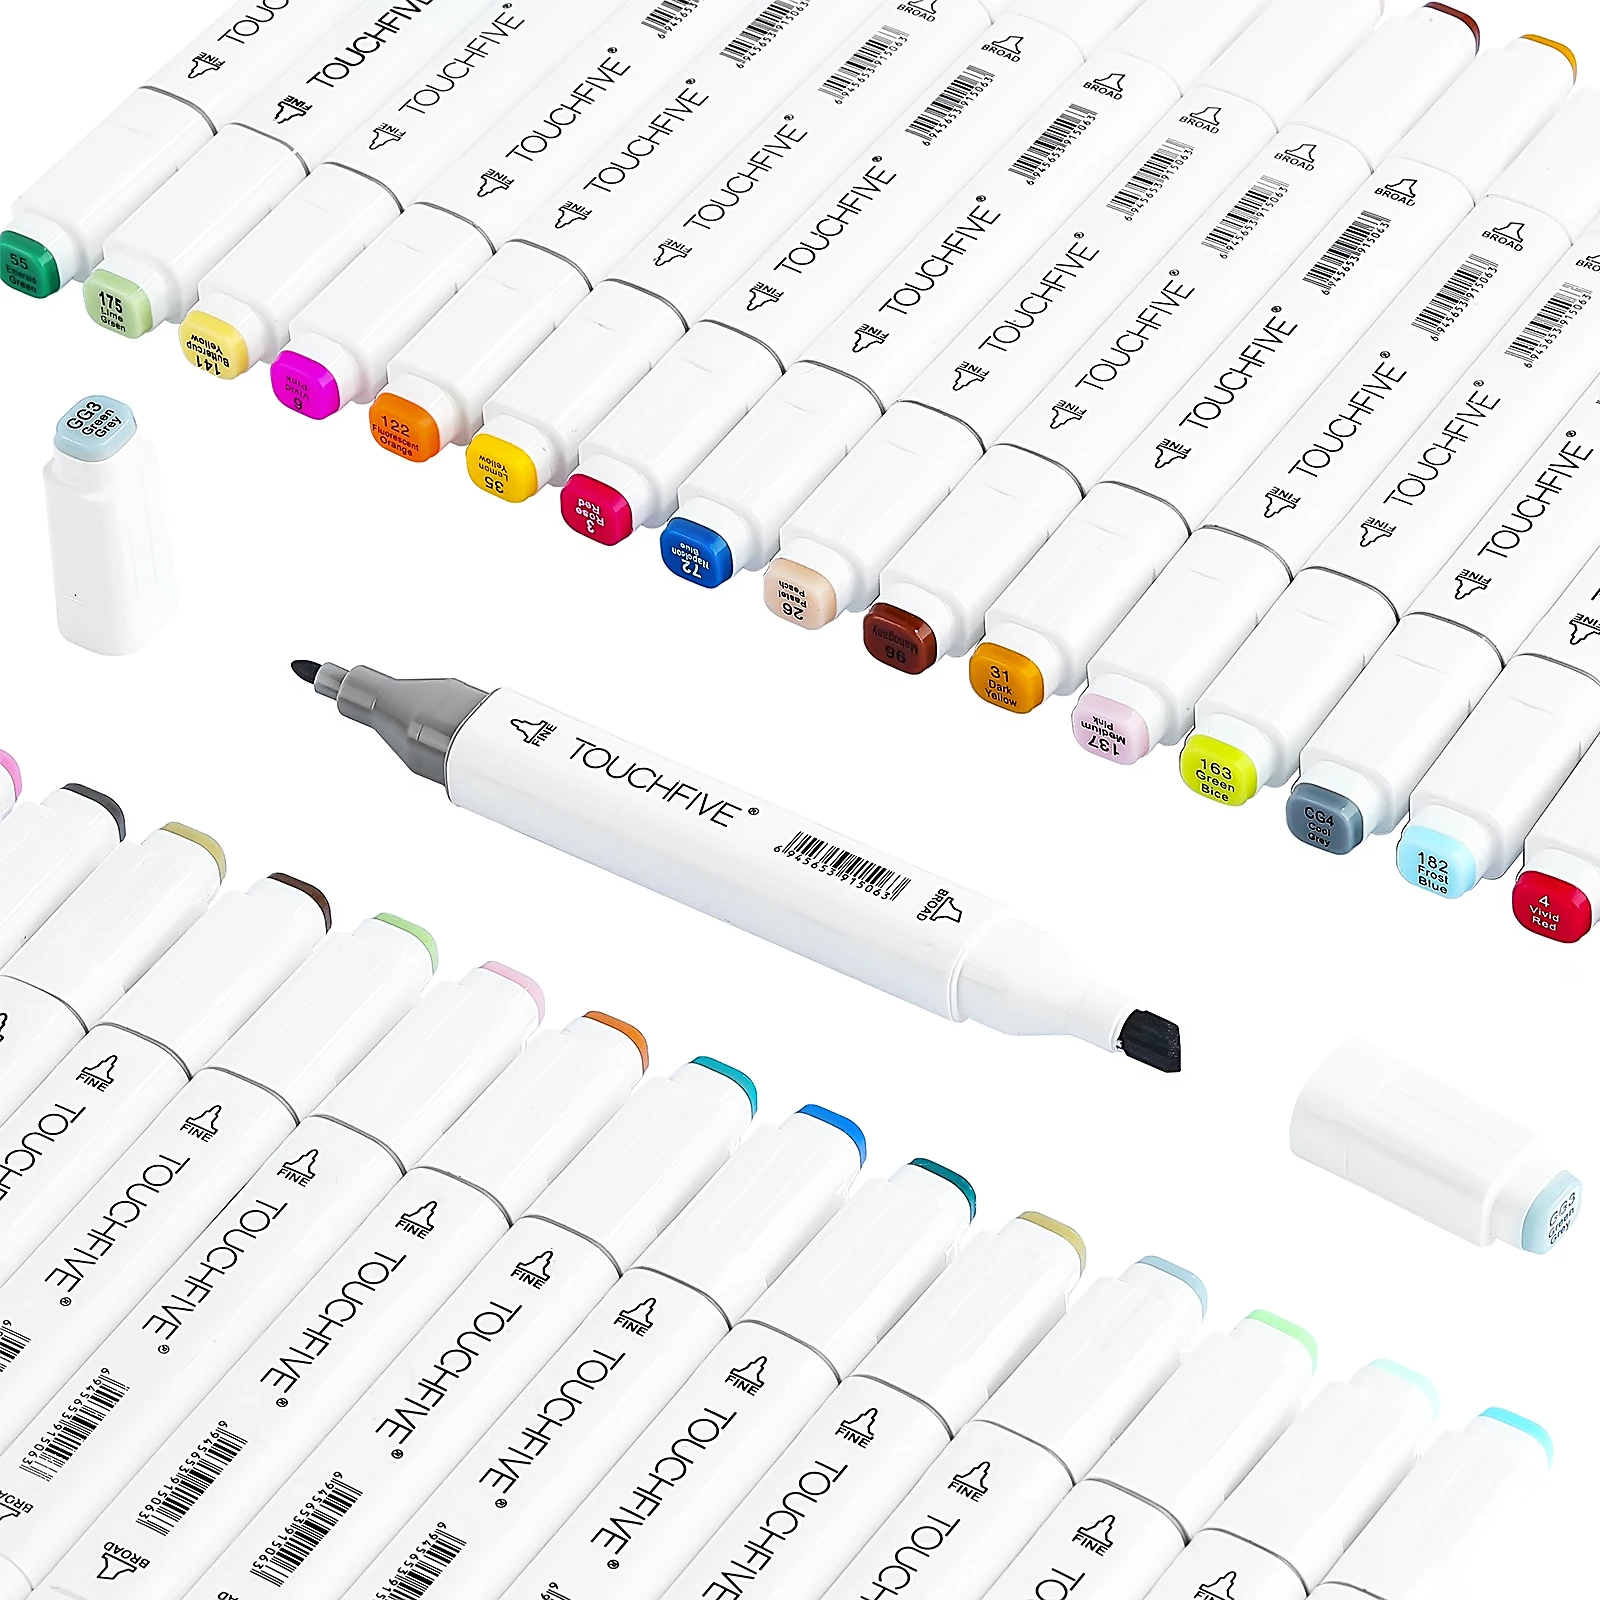 168 Colors Pen Marker Set Dual Head Sketch Markers  Touchfive Art Supplies  Markers - Art Markers - Aliexpress